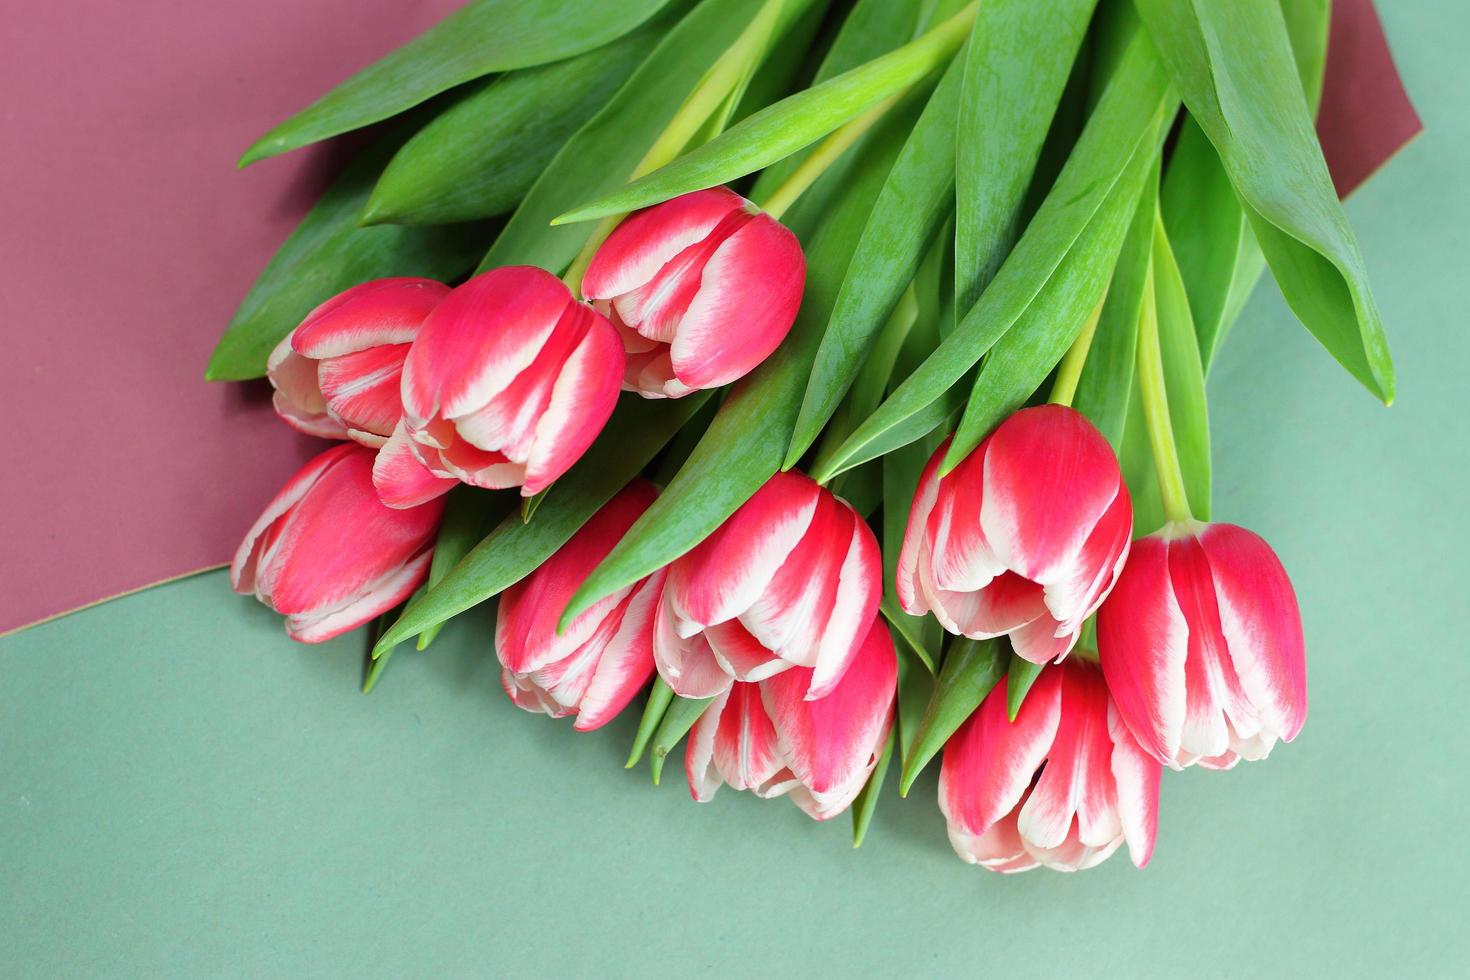 tulipes rouges et blanches photo